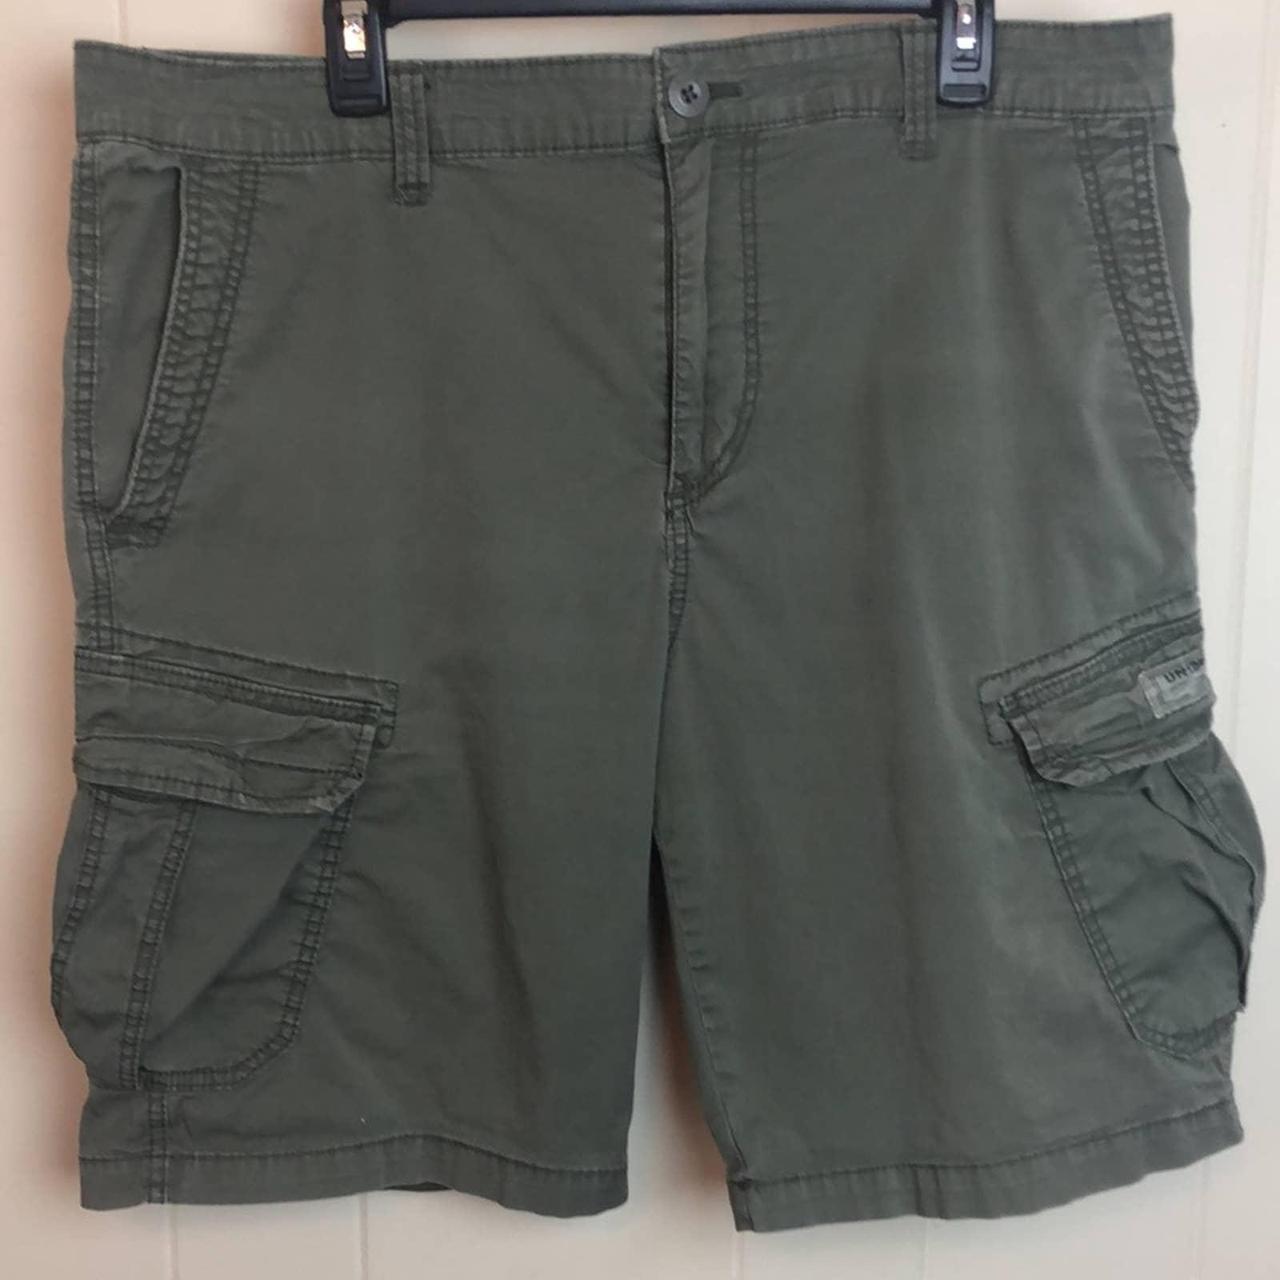 Union Bay Men's Green Shorts